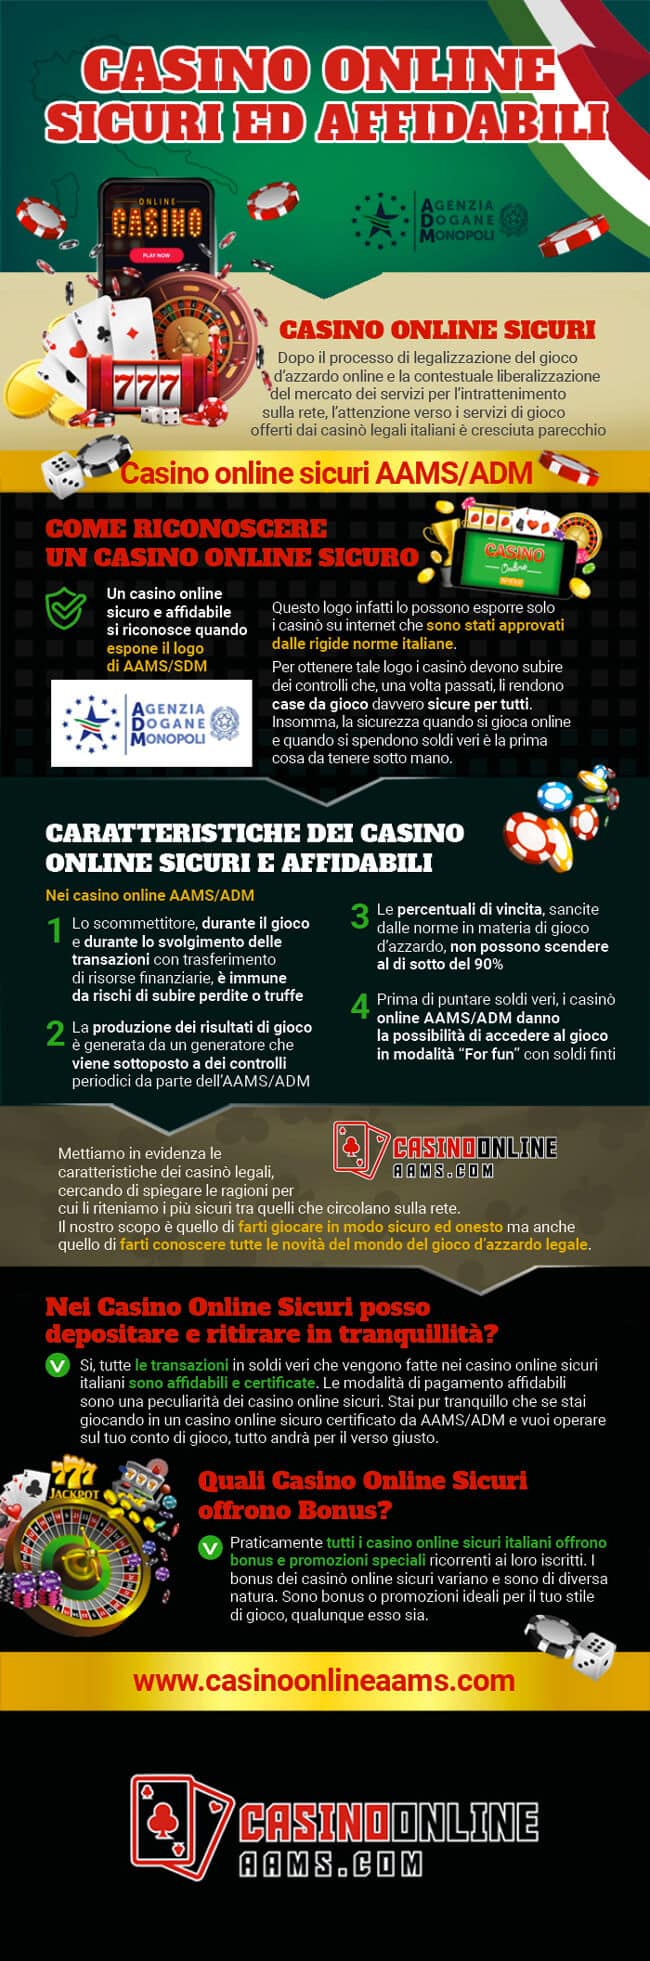 Infografica sui Casino Online Sicuri ed Affidabili